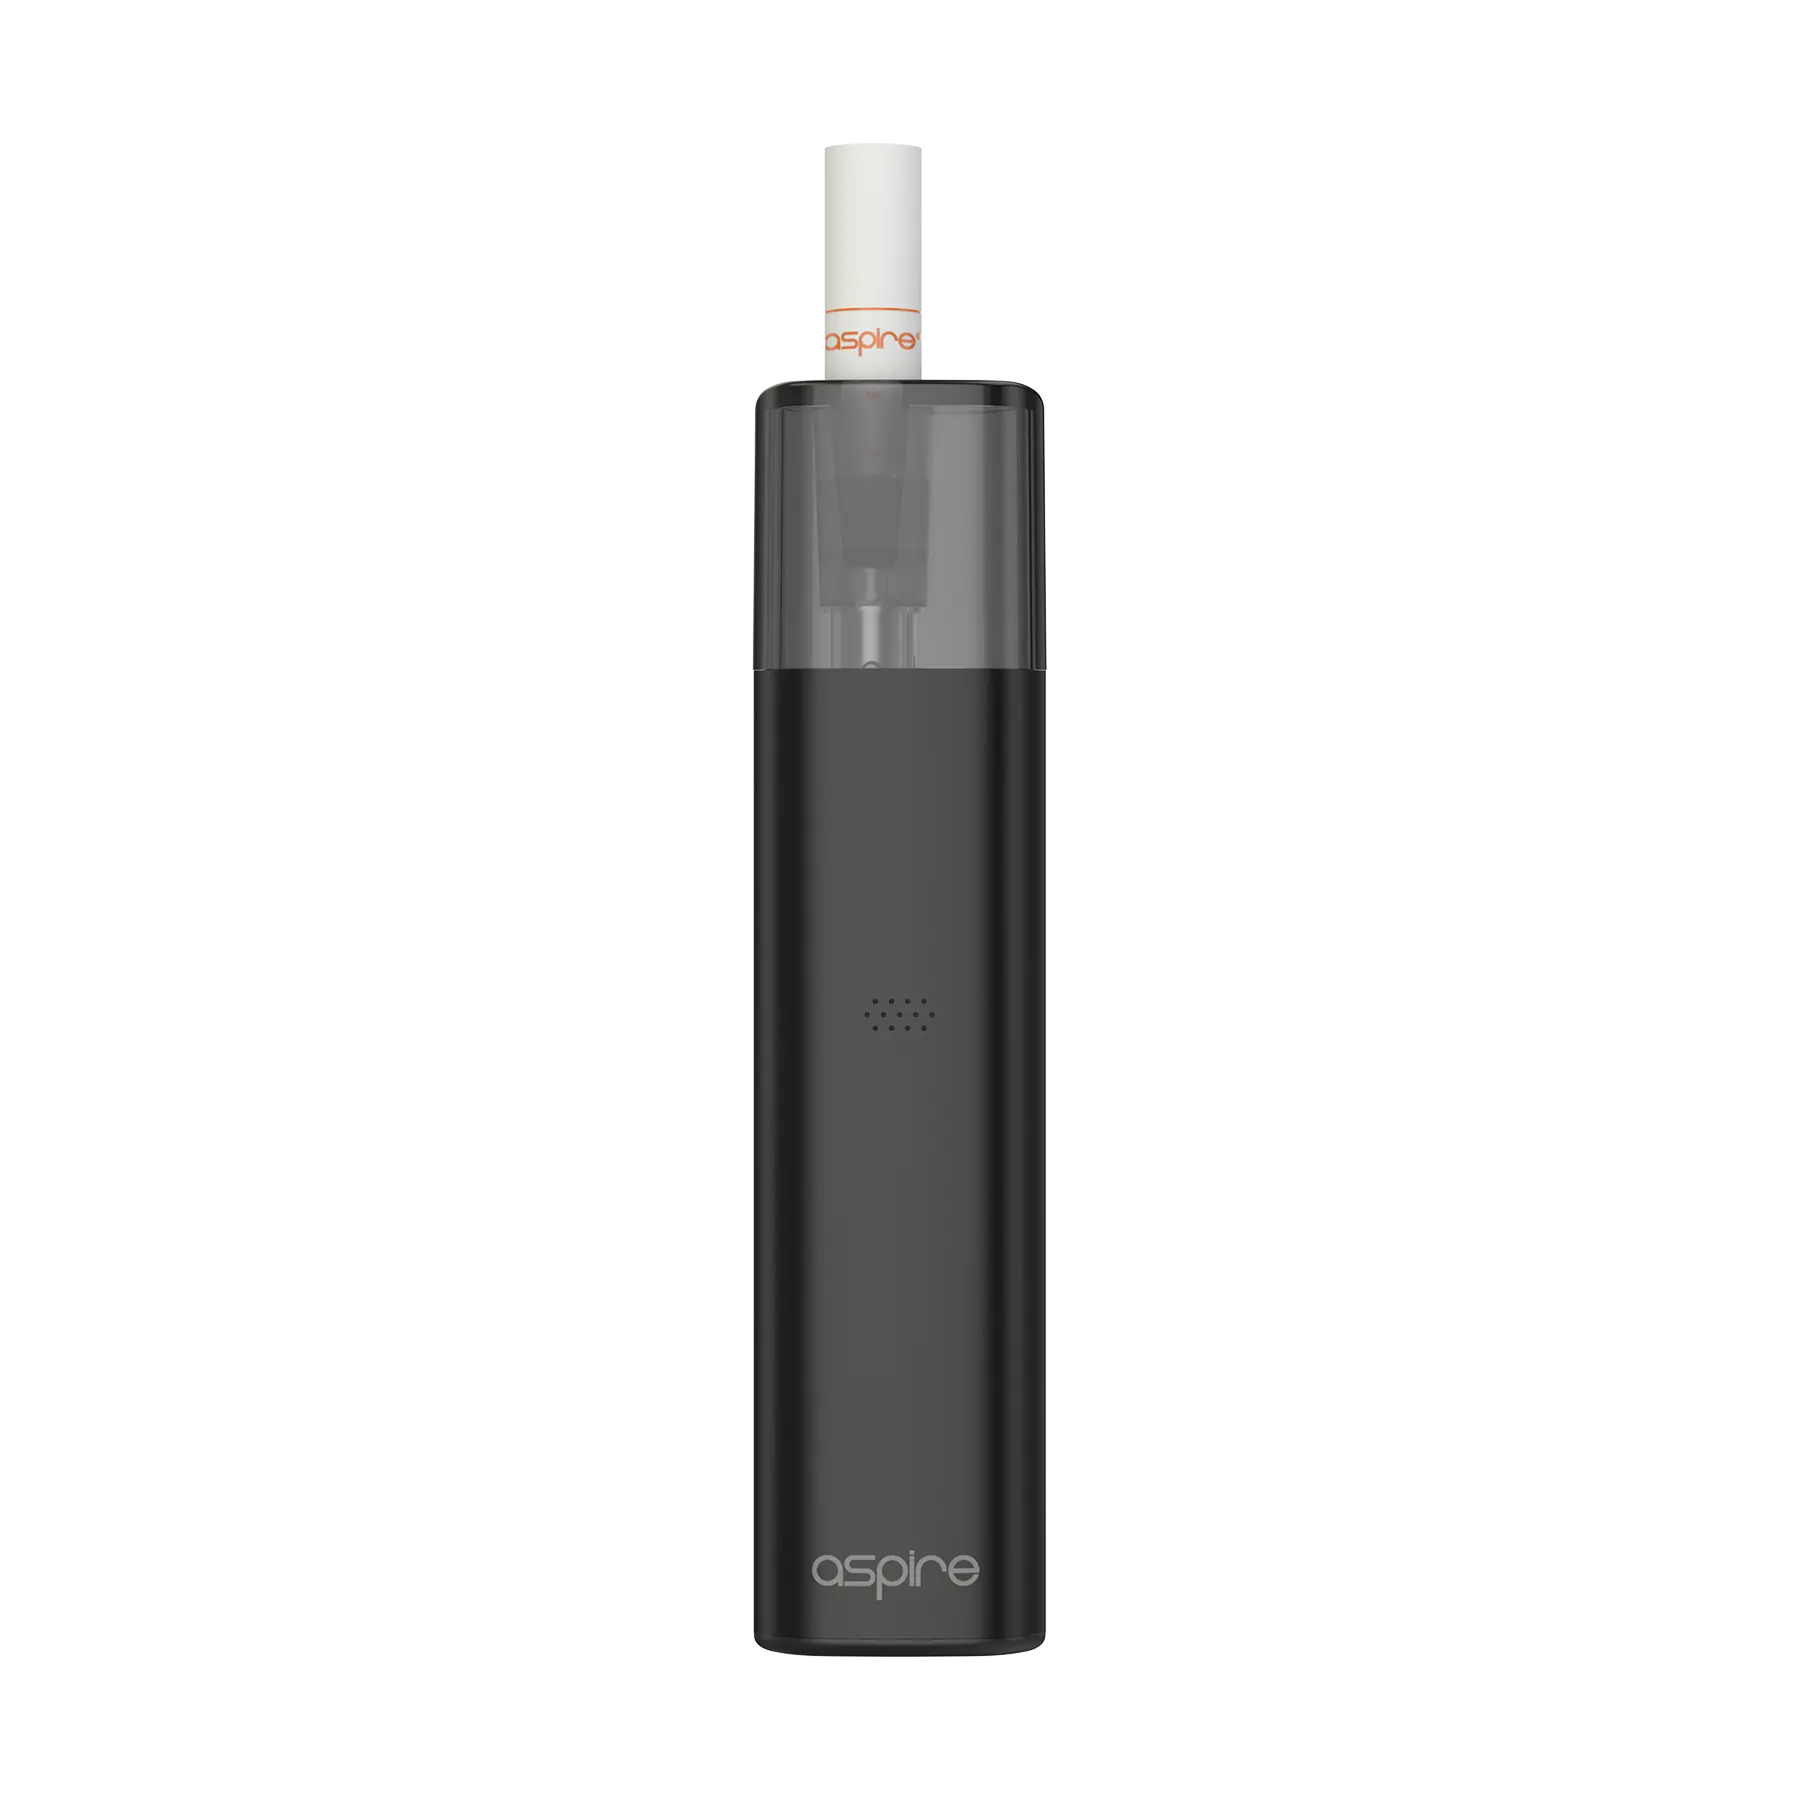 Aspire UK Vilter 450mAh E-Cigarette - Black